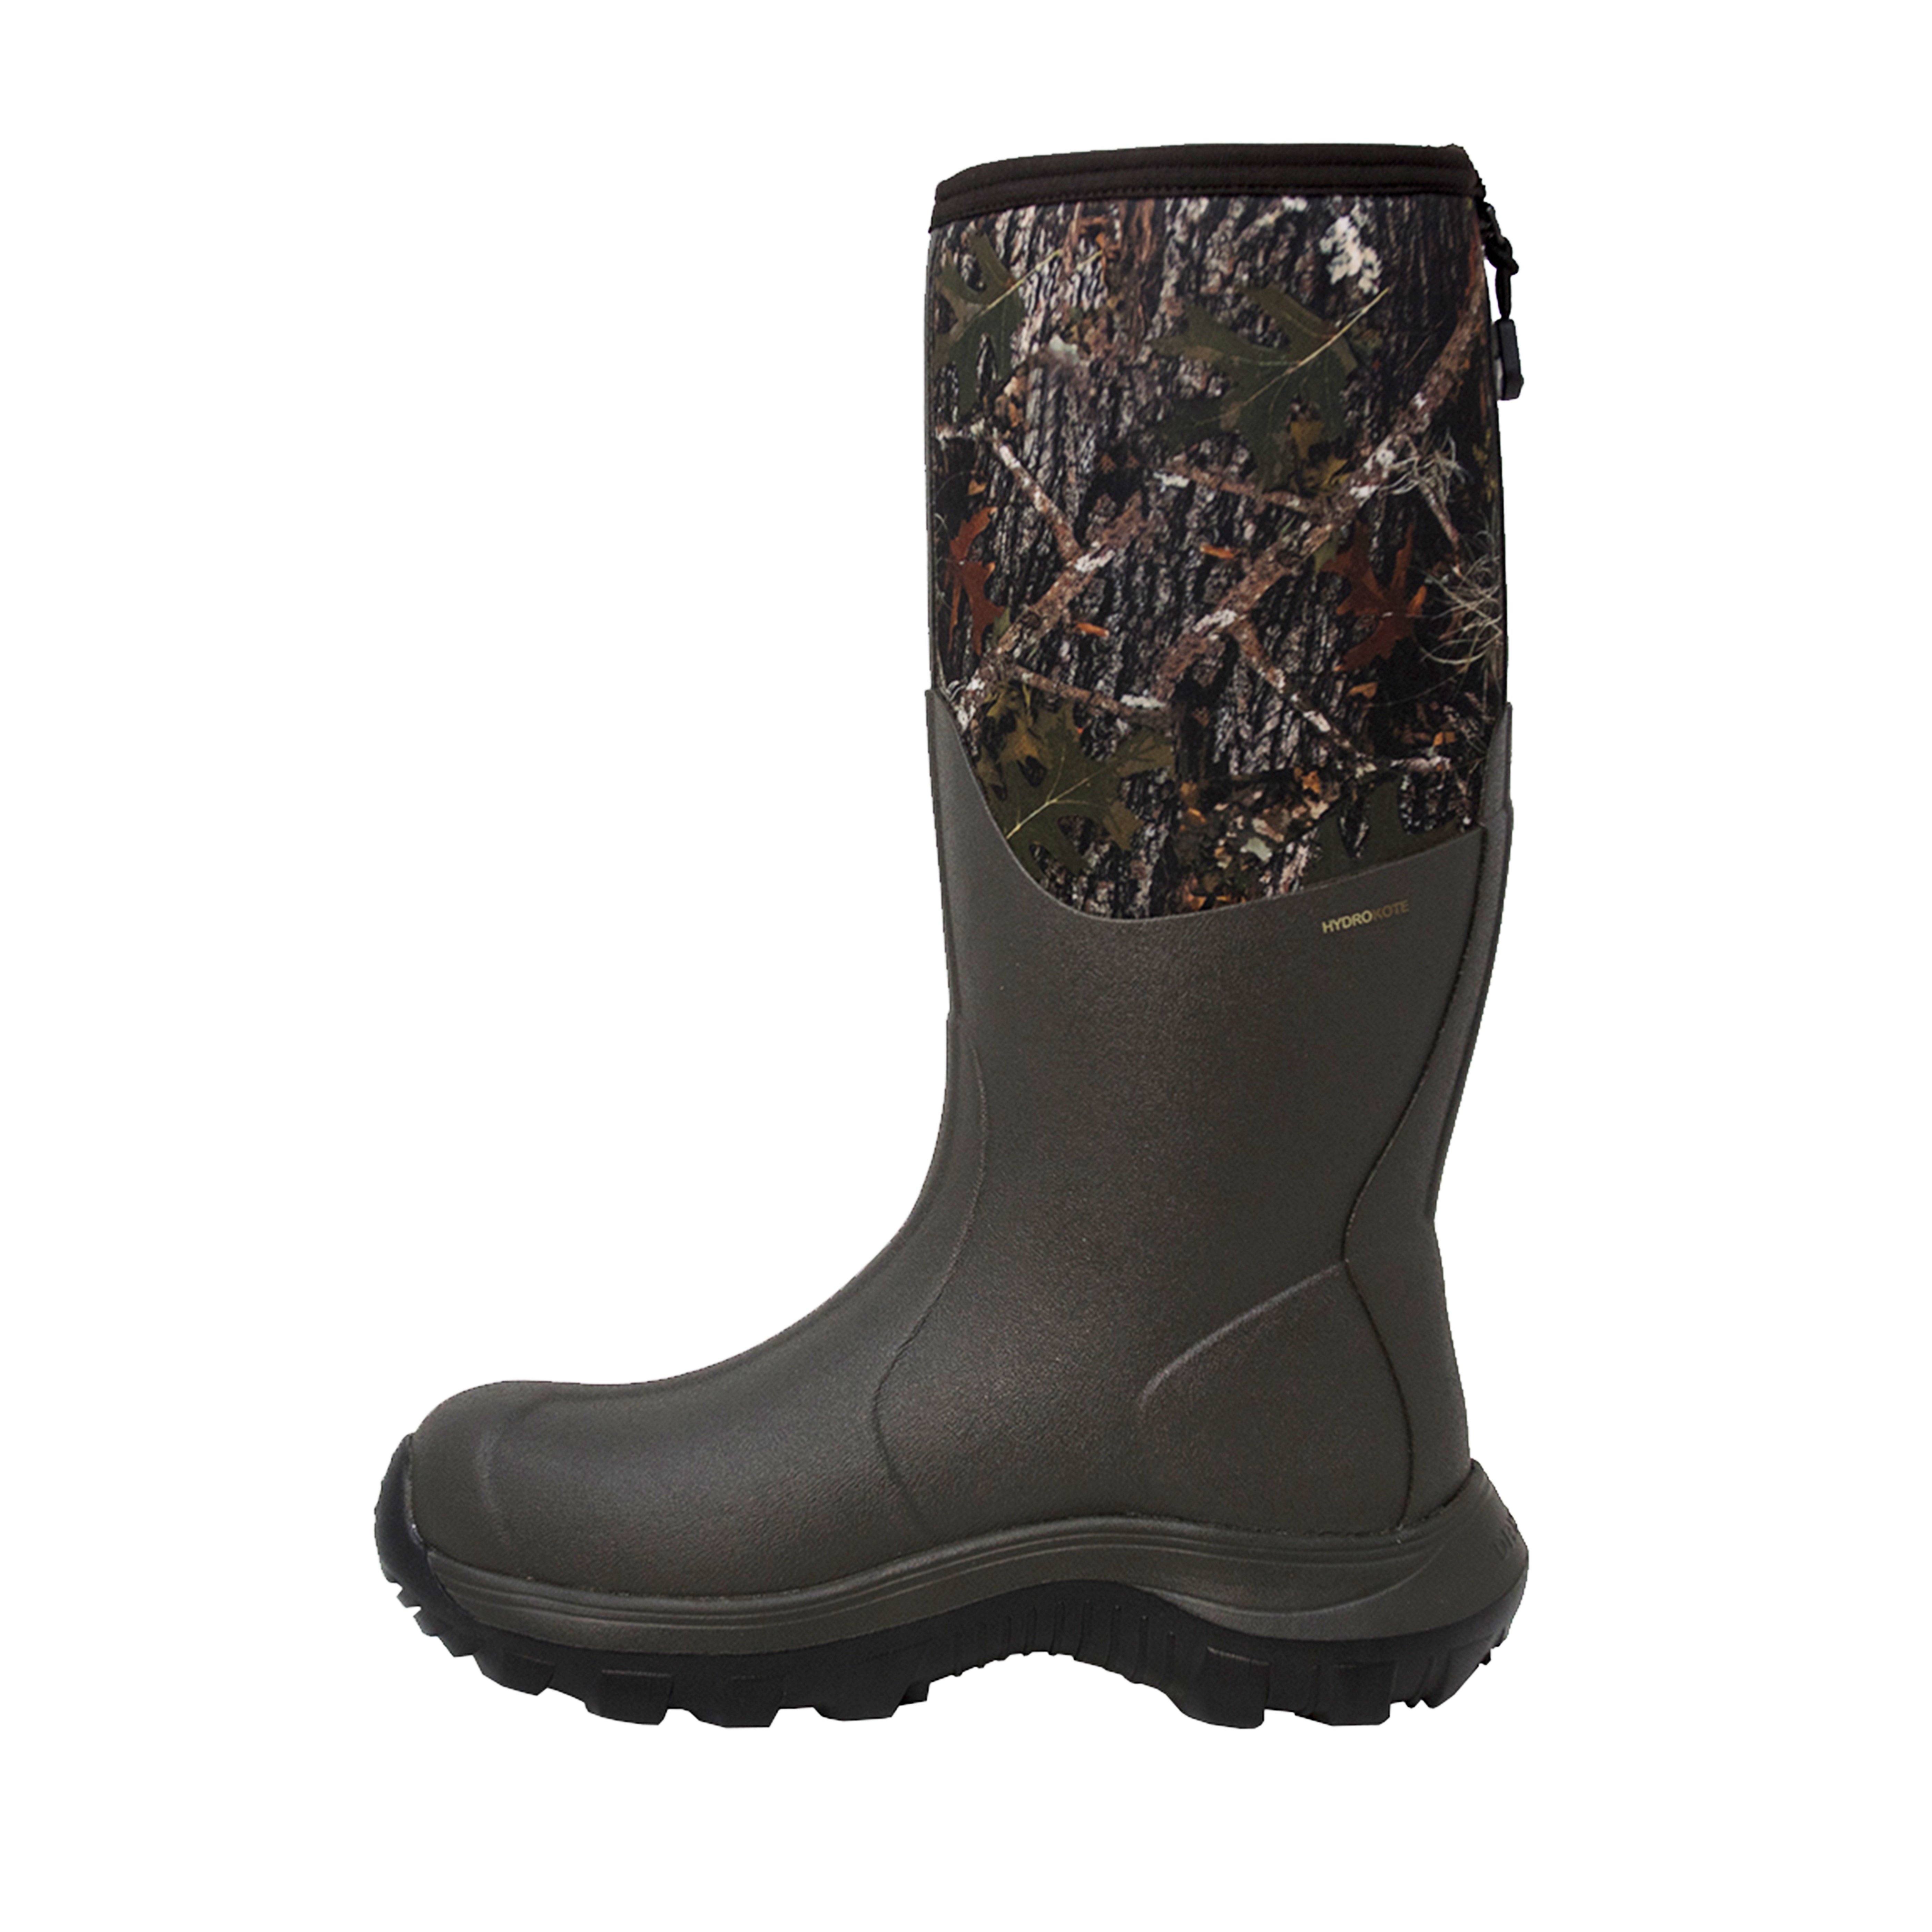 Evalusion Hunt Camo/Bark – Dryshod Waterproof Boots